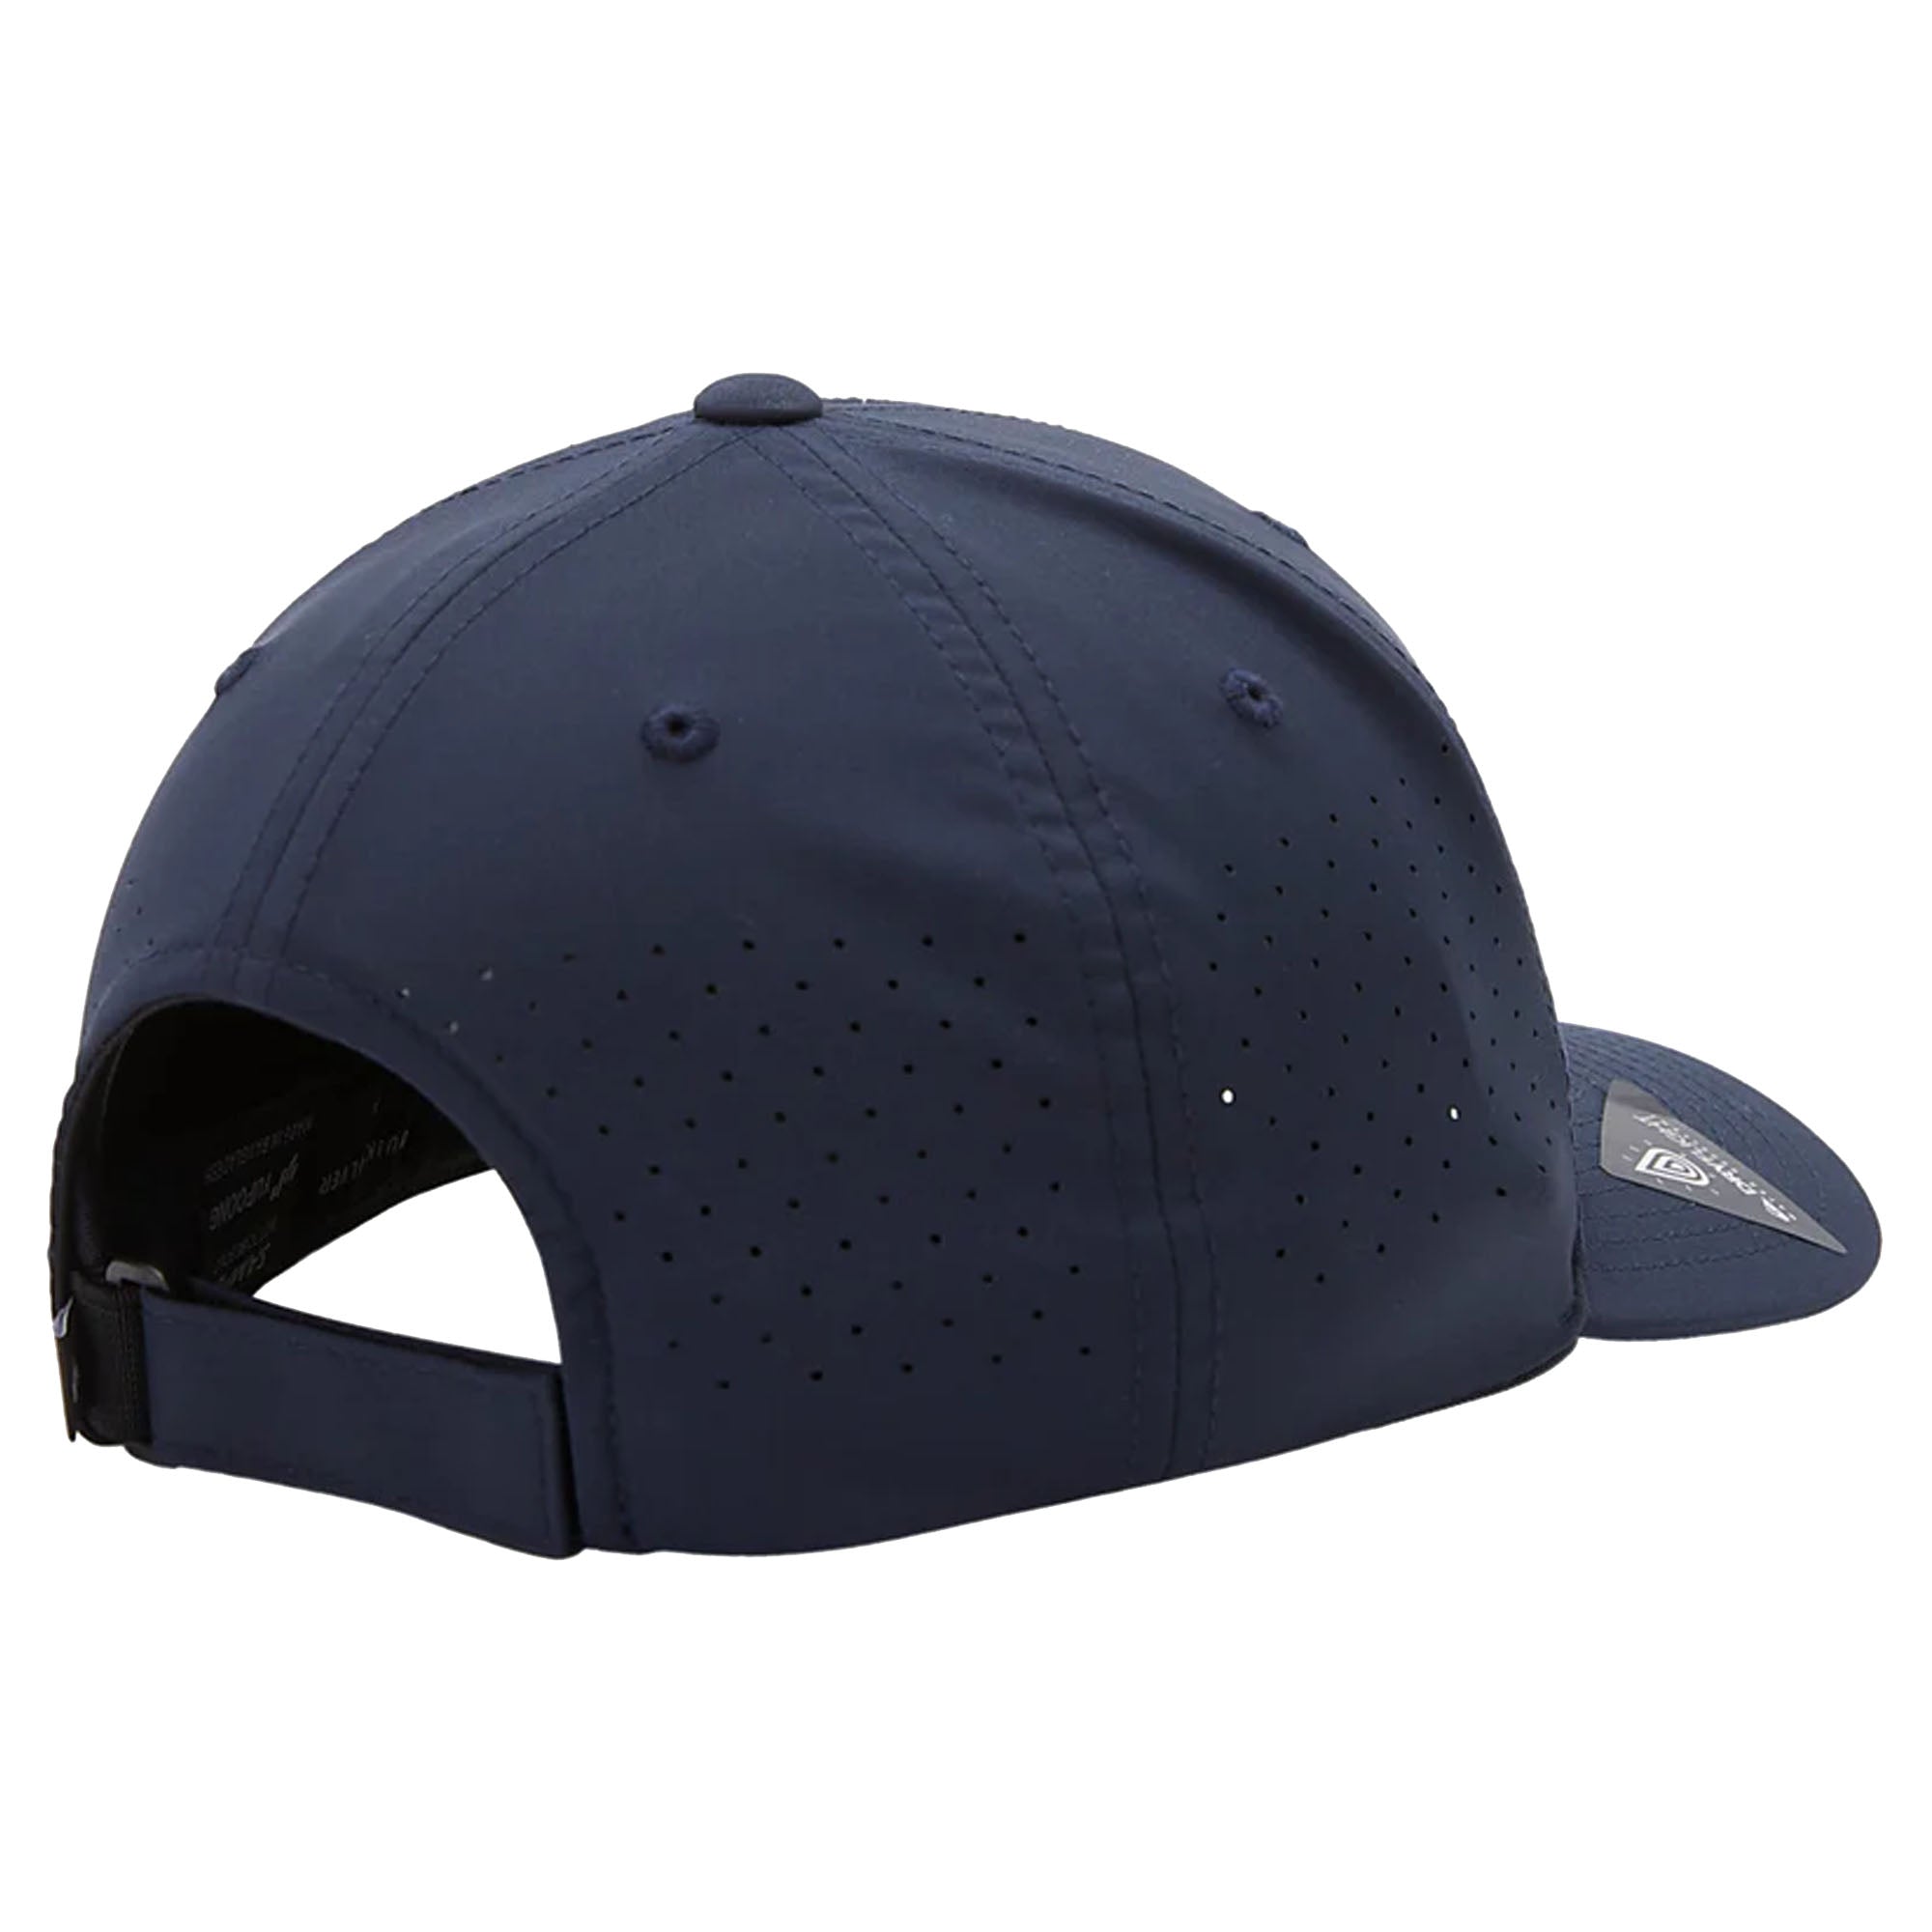 Quiksilver Adapted Flex Fit Men's Hat